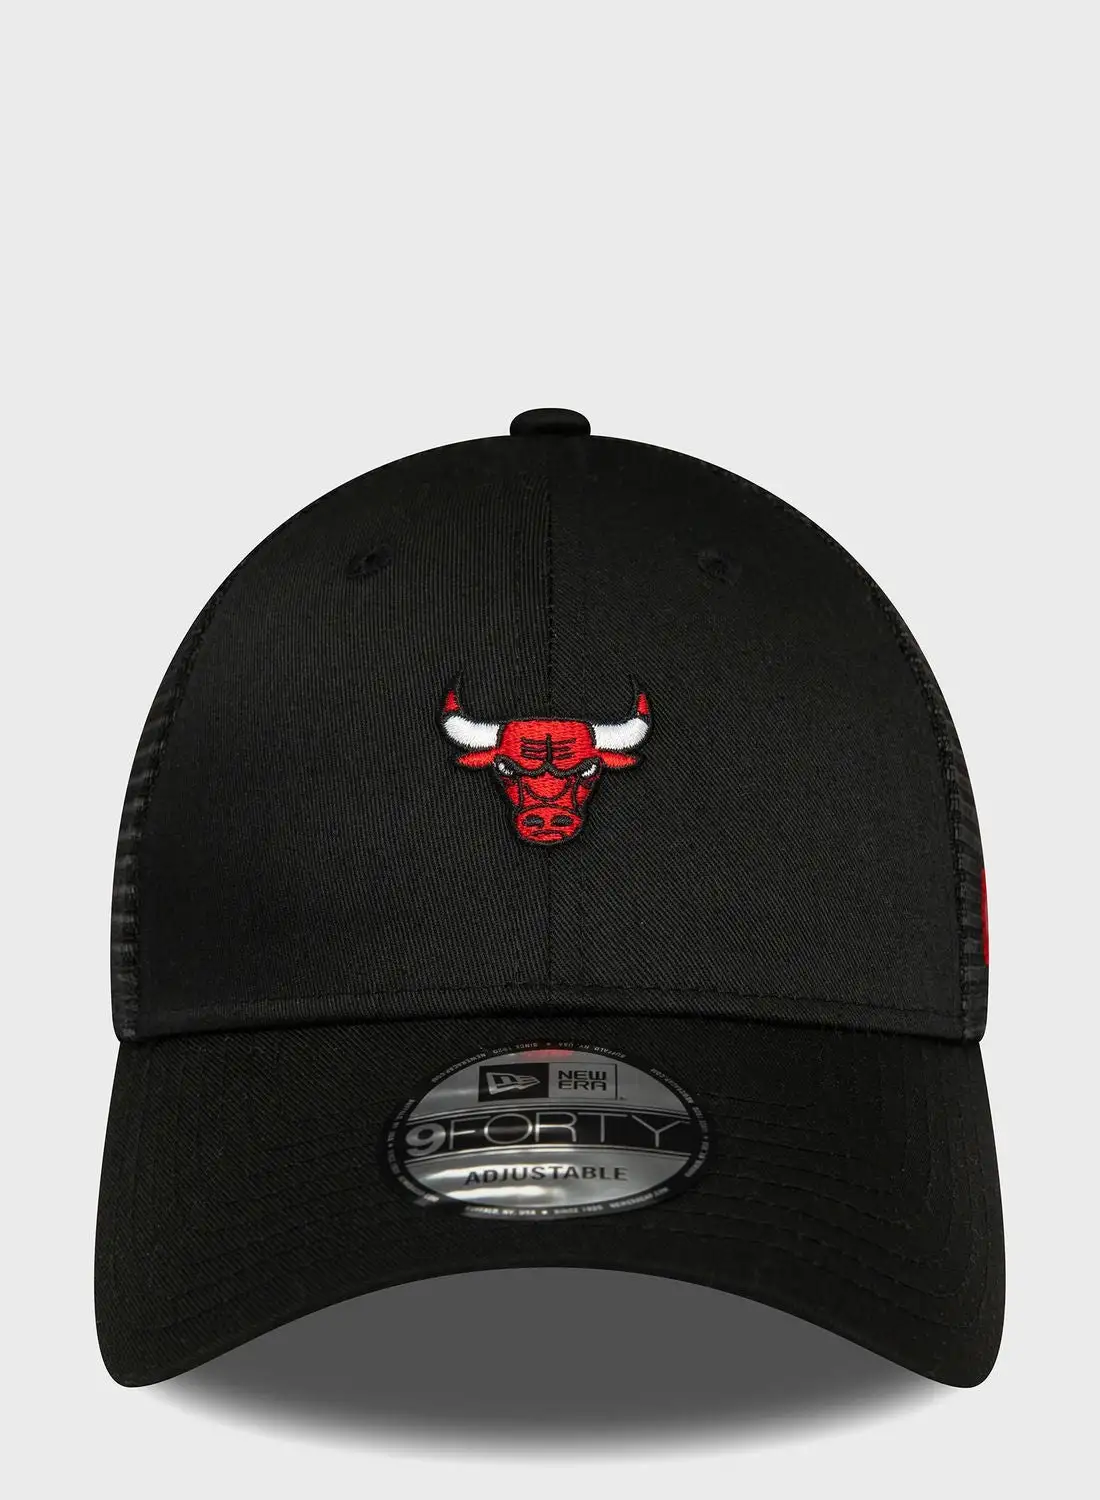 NEW ERA Chicago Bulls Trucker Cap